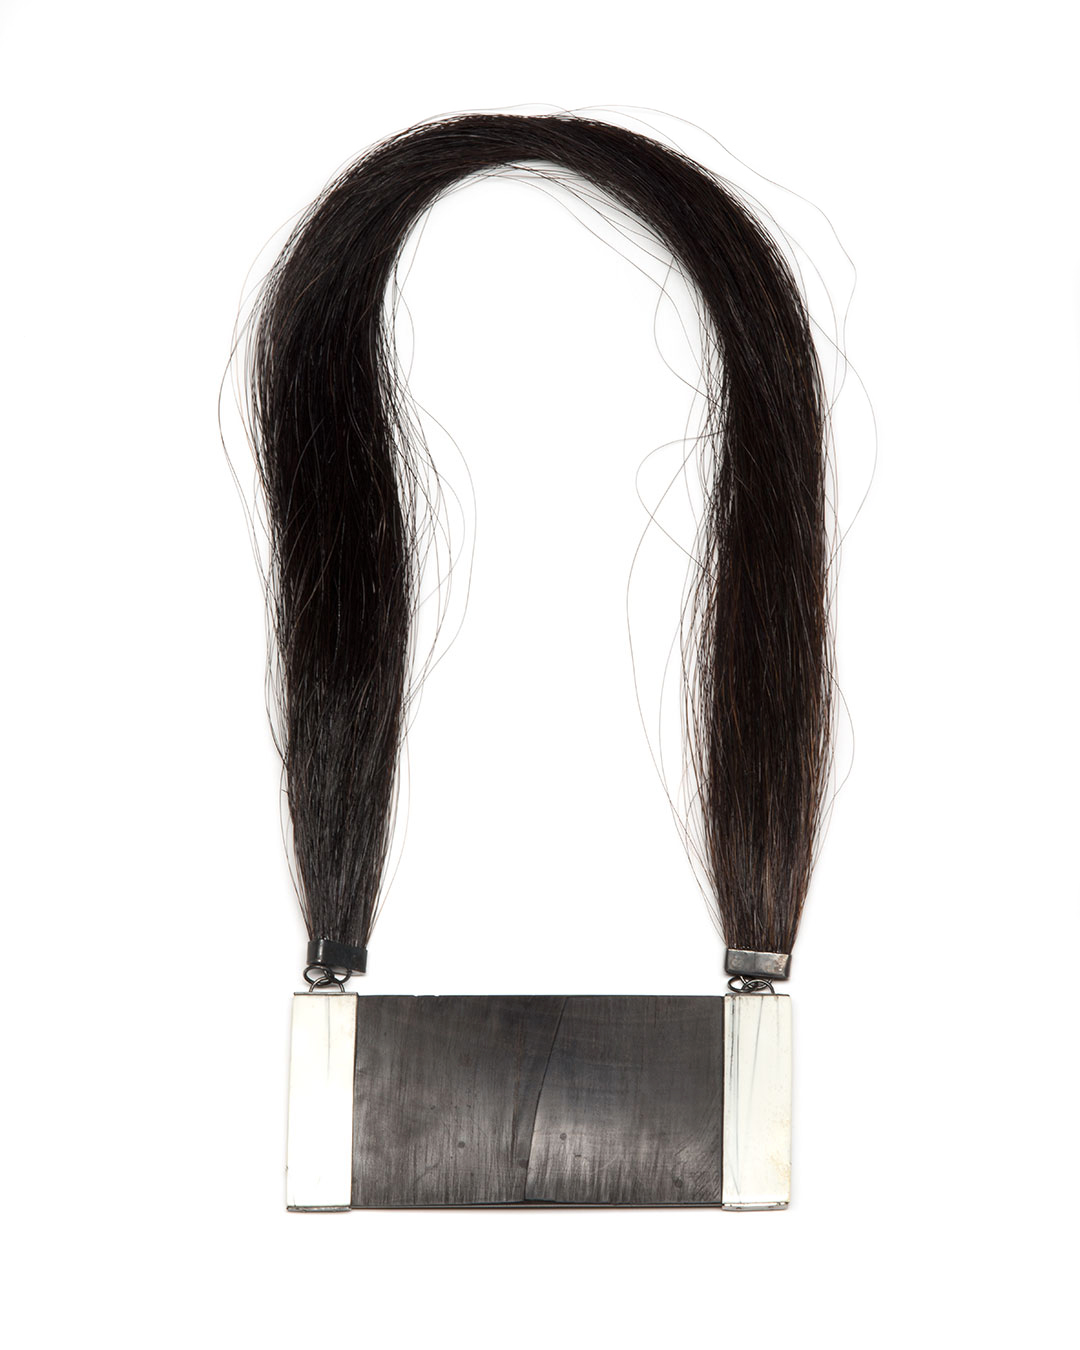 Mareen Alburg Duncker, Landscape 1, 2015, necklace; ebony, horse hair, silver plastic, 350 x 250 x 9 mm, €1210